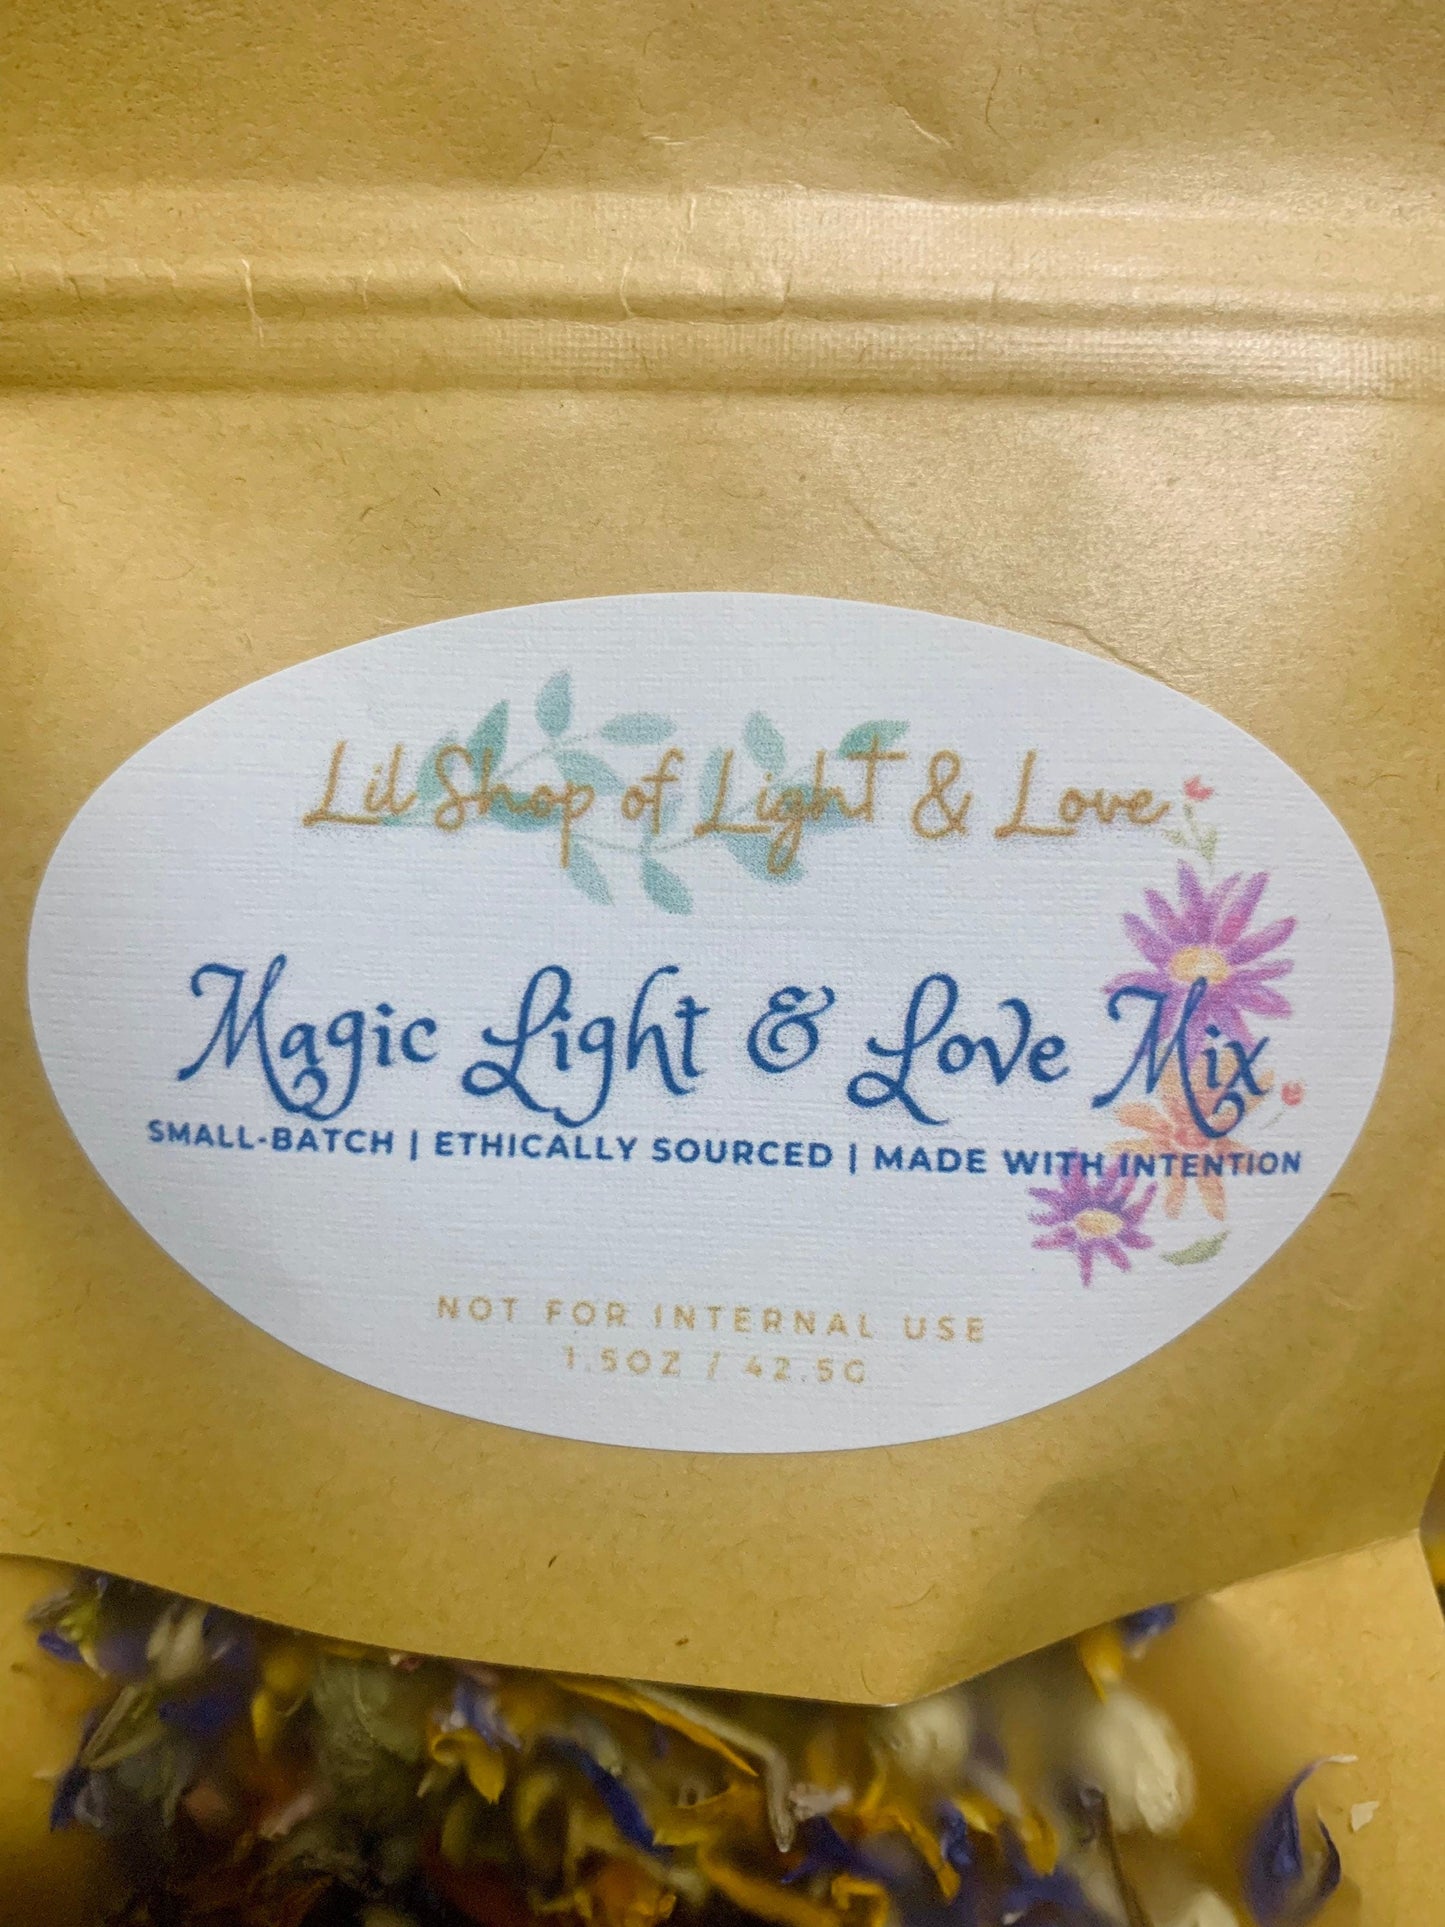 magic light & love mix - Lil Shop of Light & Love